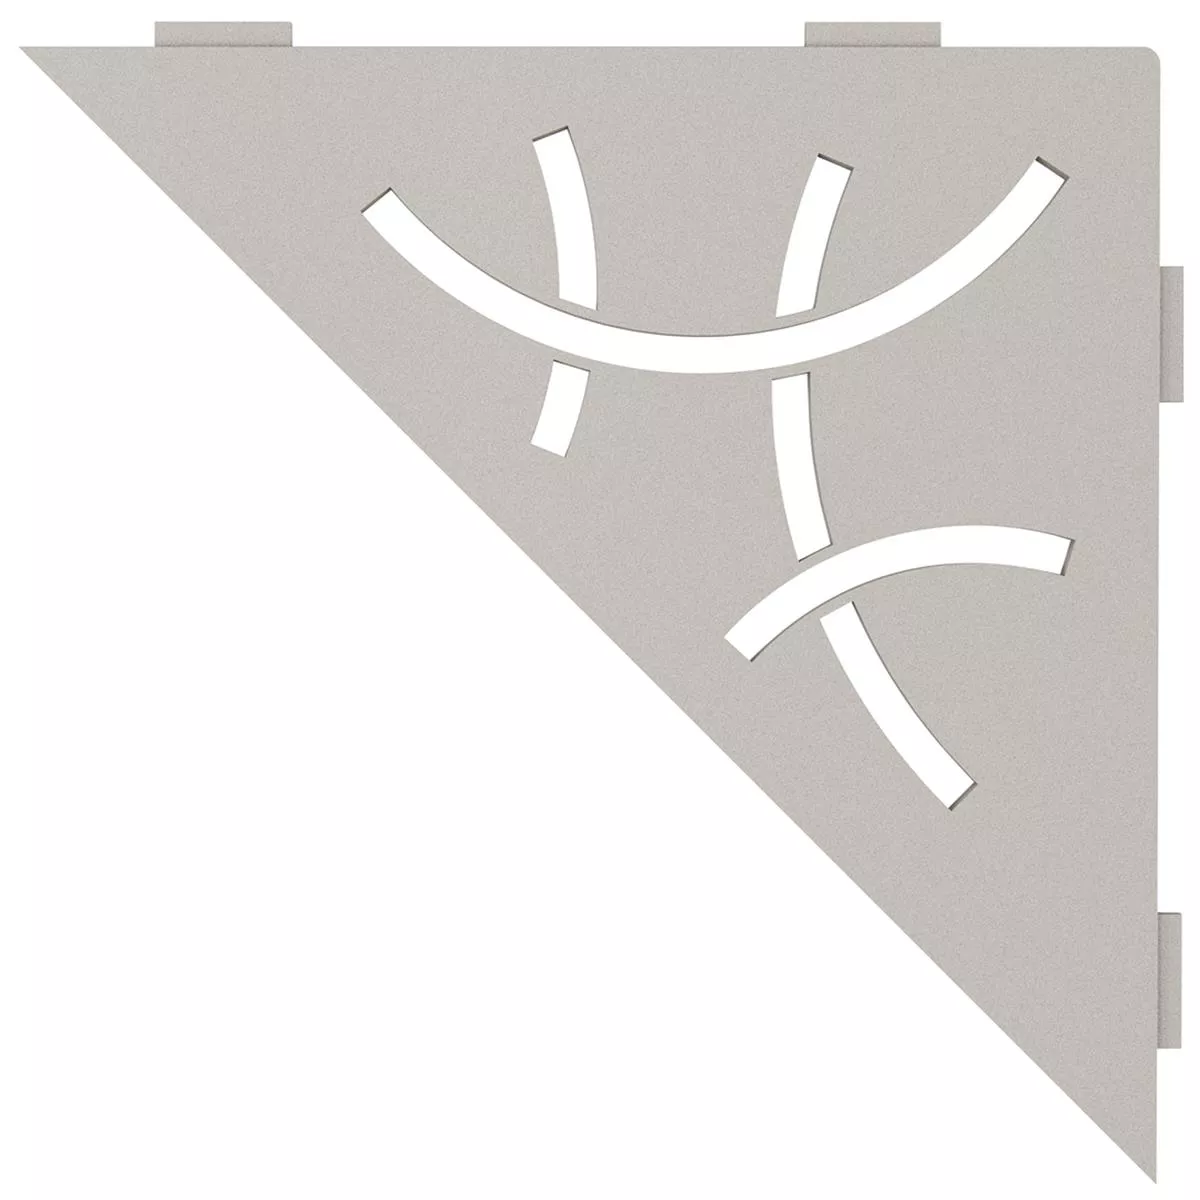 Schlüter wall shelf triangle 21x21cm curve beige gray